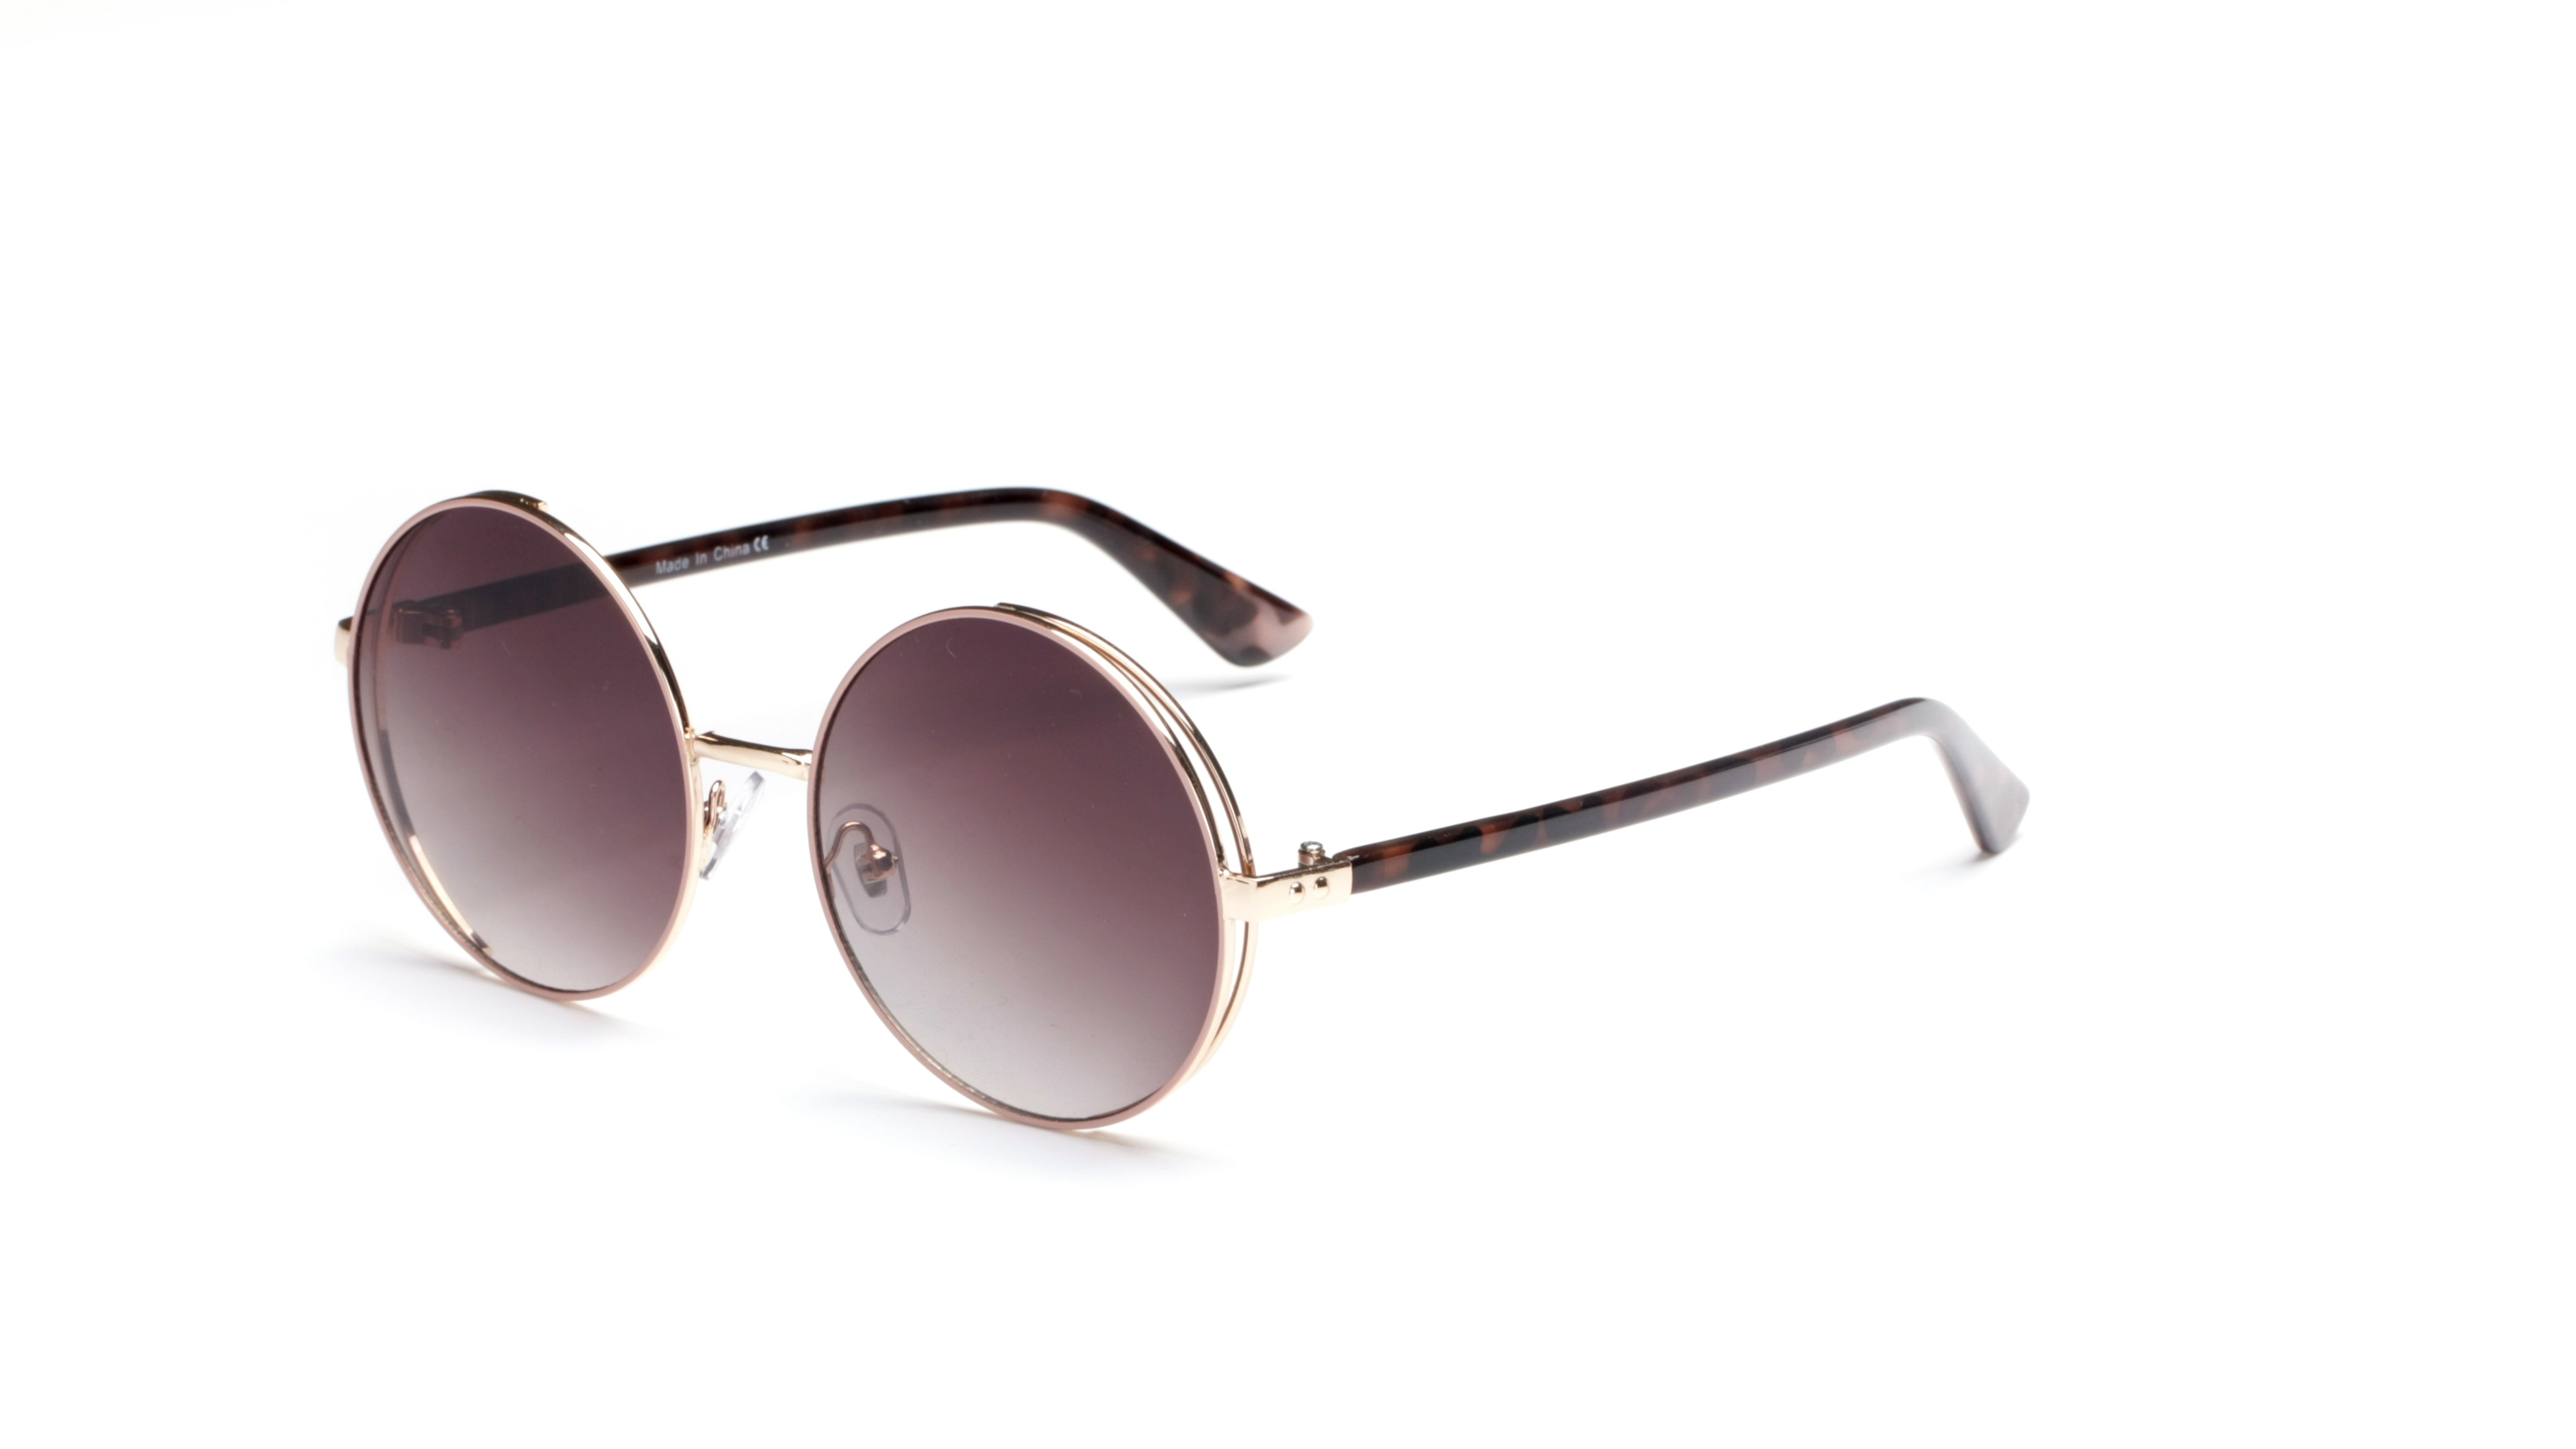 S2085 - Women Round Fashion Sunglasses - Iris Fashion Inc. | Wholesale Sunglasses and Glasses